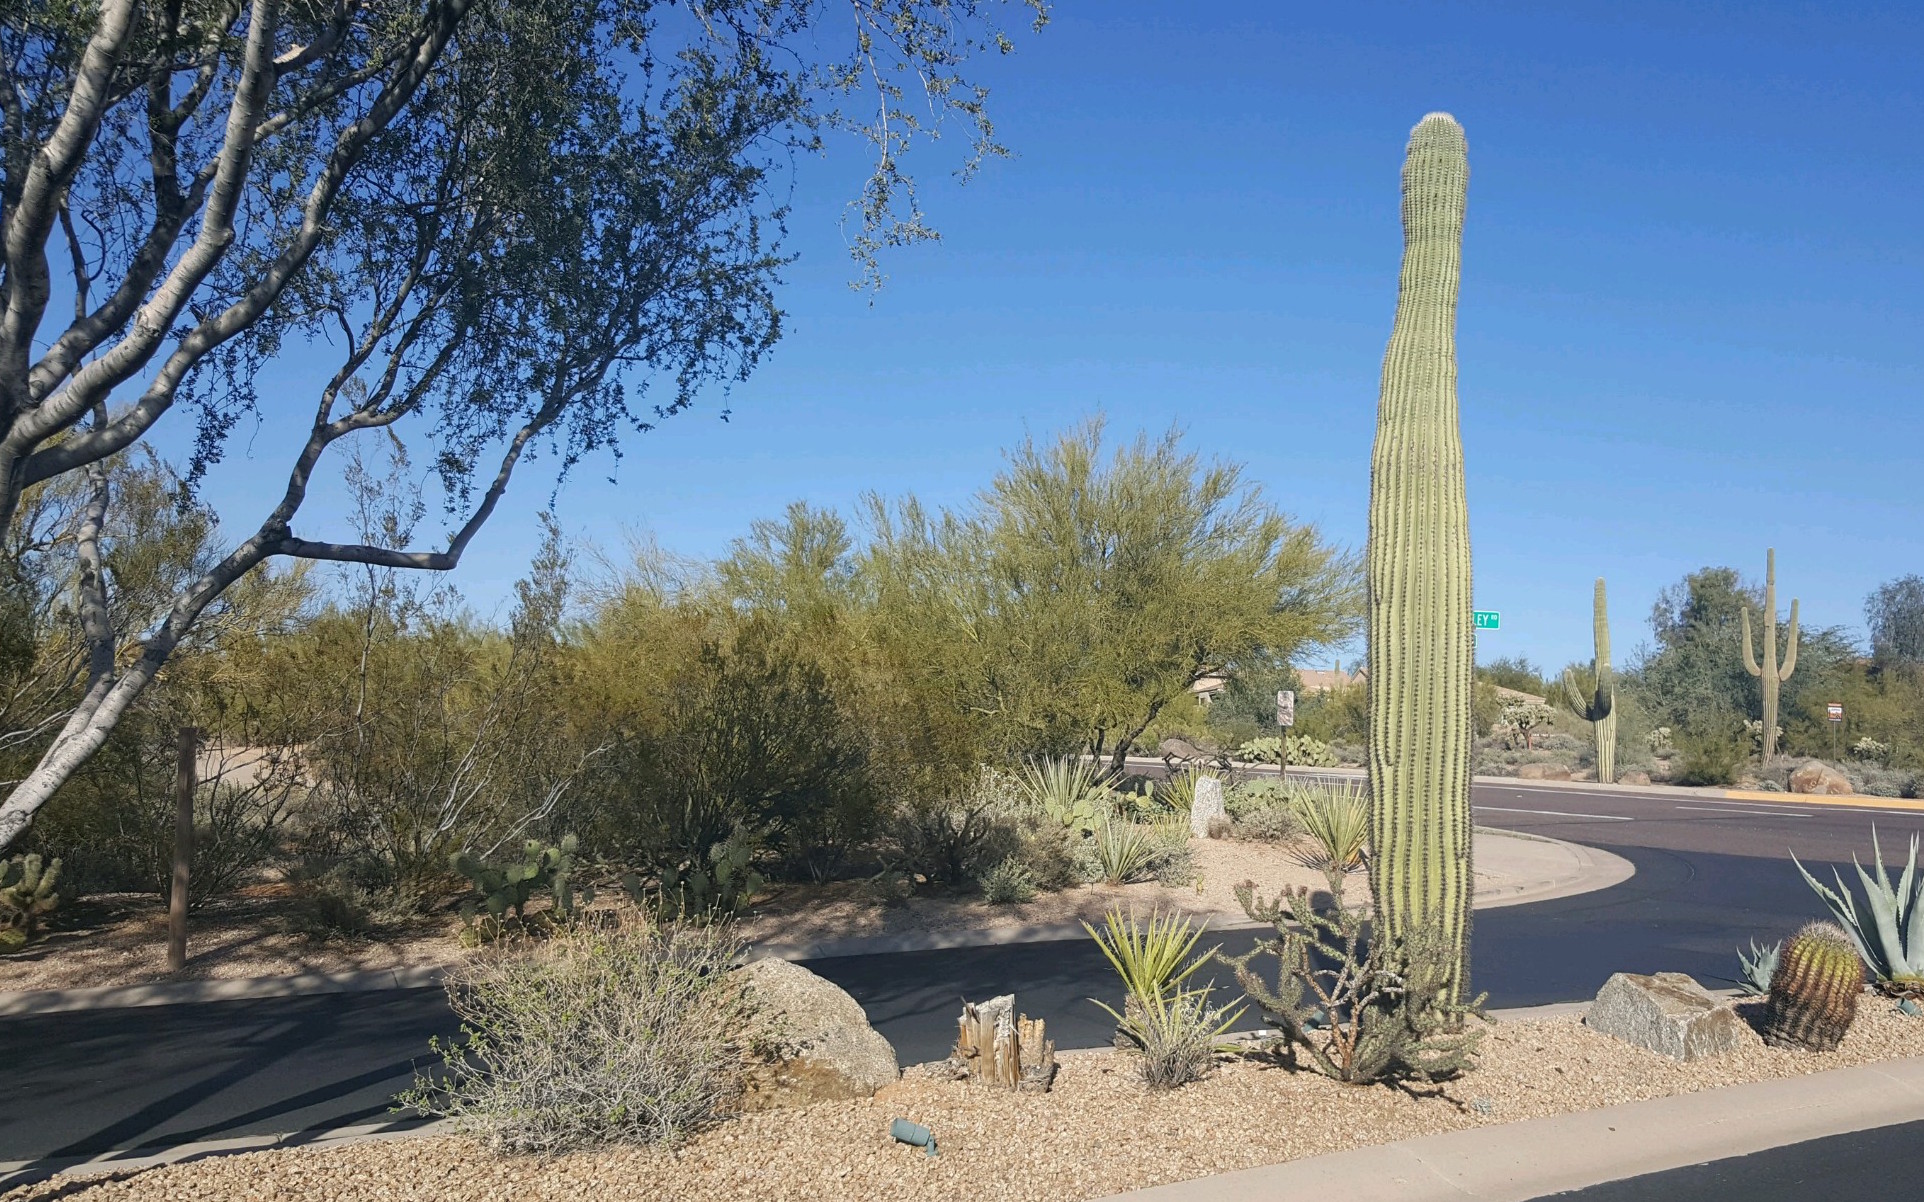 Cactus and scenery in Scottsdale, AZ